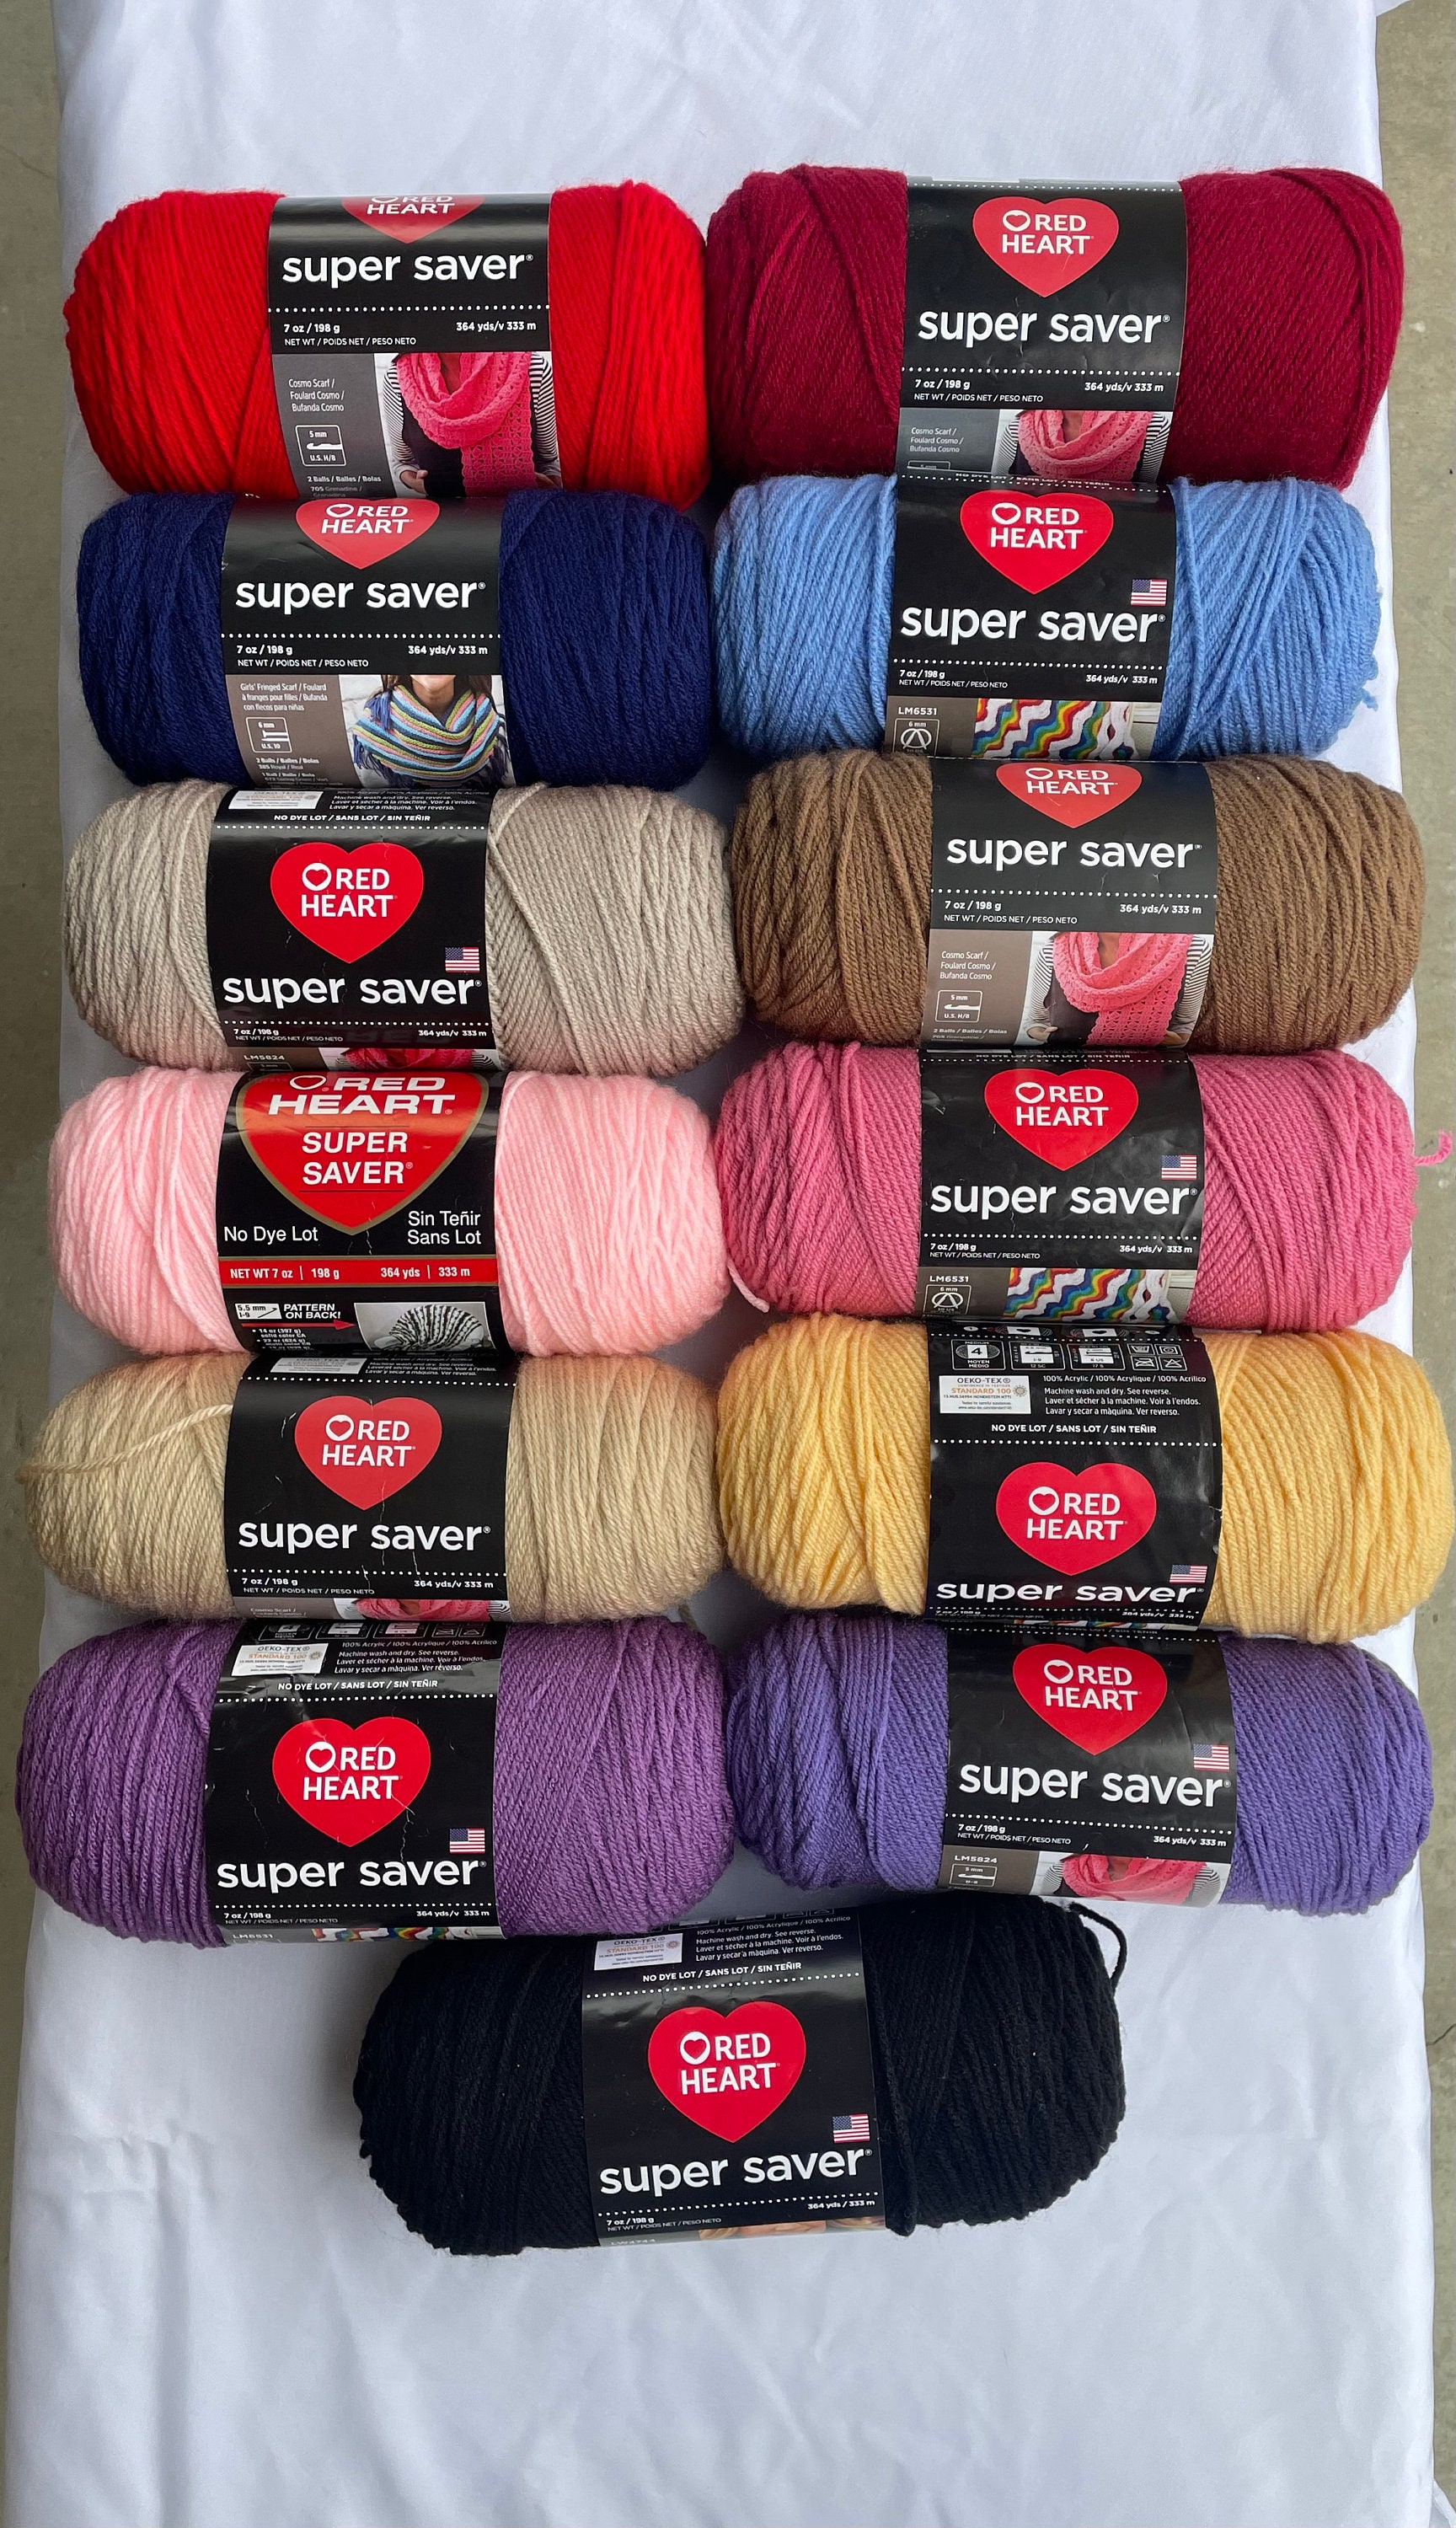 DROPS Sky Knitting Yarn Super Soft and Lightweight in Baby Alpaca and  Merino Wool Yarn Chunky Yarn 